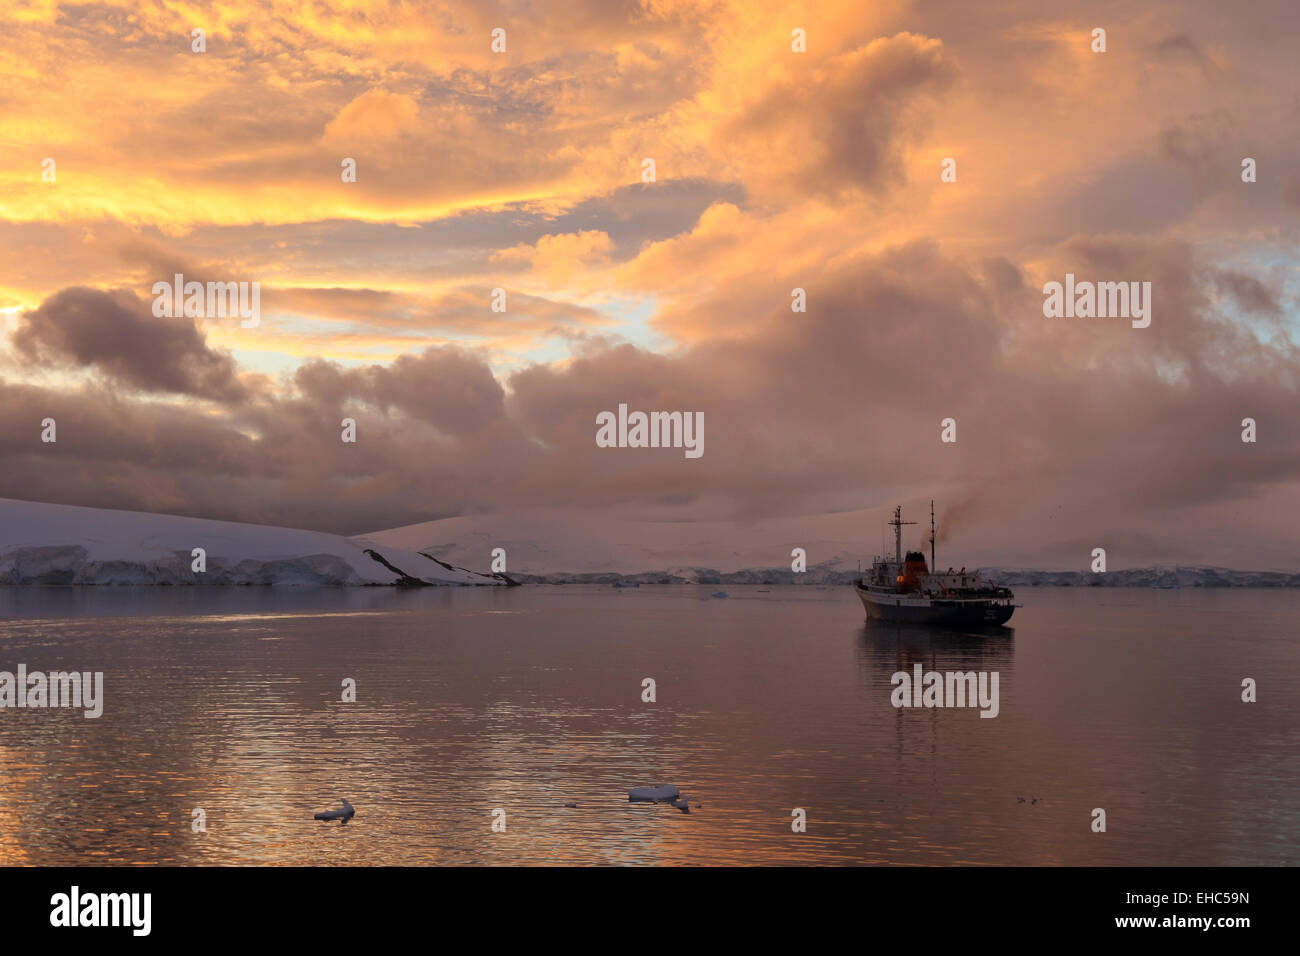 Antarctica landscape sky image of sunset at Port Lockroy. Tourist cruise ship, expedition ship the Ushuaia. Stock Photo